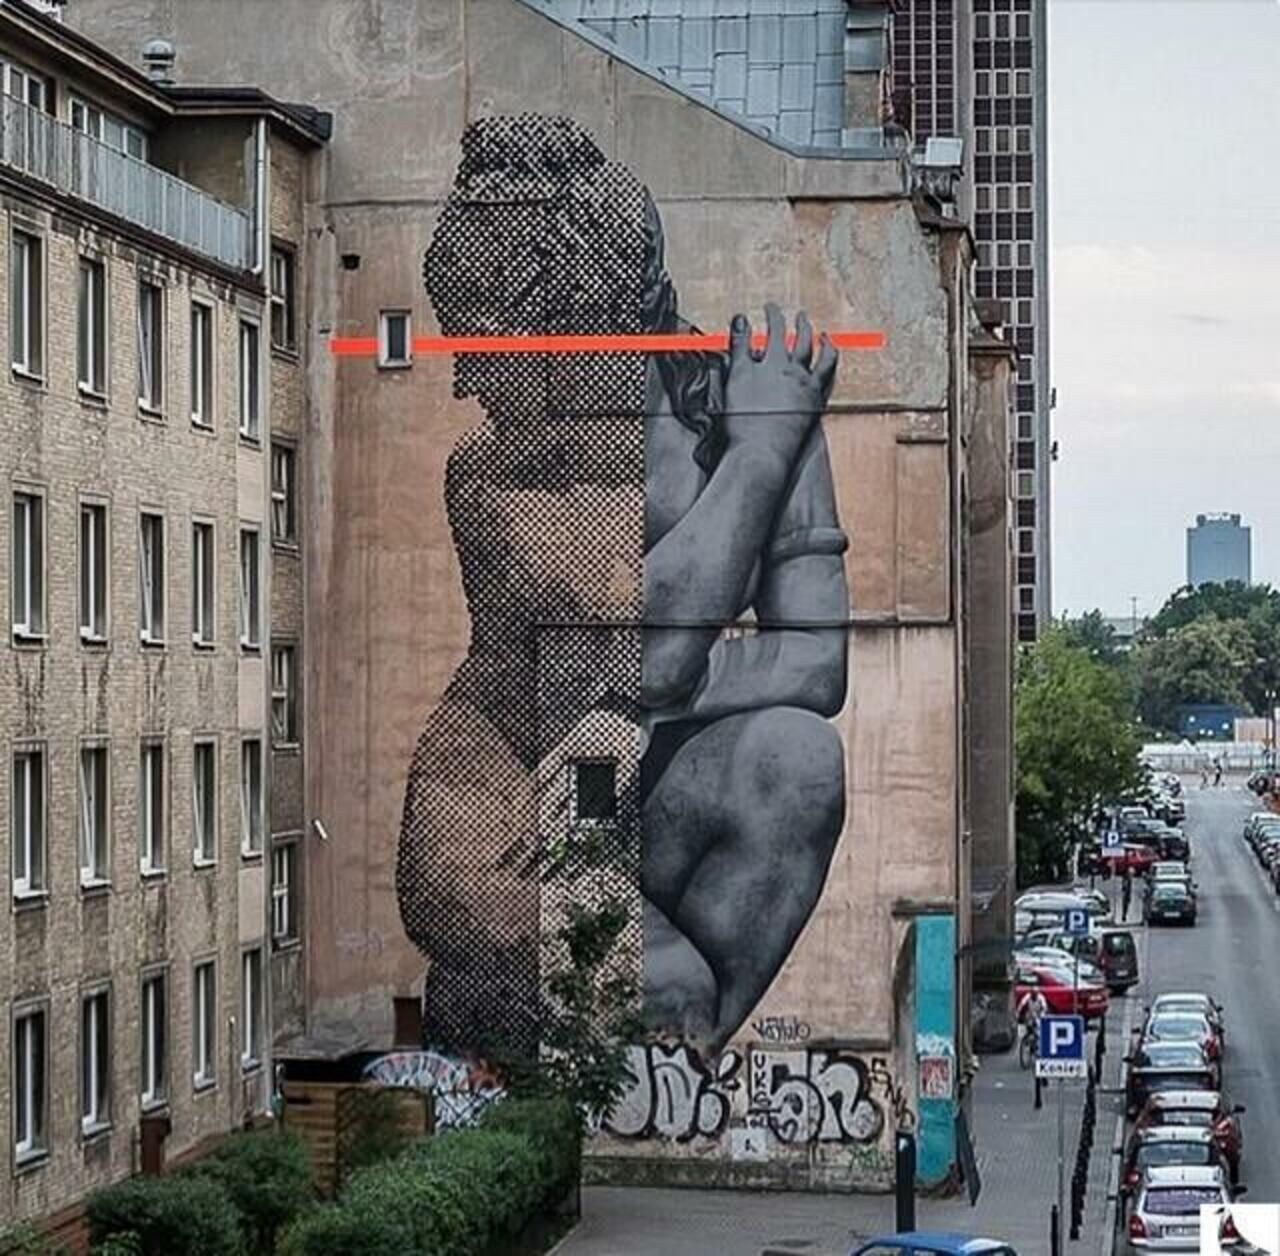 RT @designopinion: Artist @_cyrcle large scale Street Art mural located in Warsaw, Poland. #art #mural #graffiti #streetart http://t.co/yNrv4OeSrA